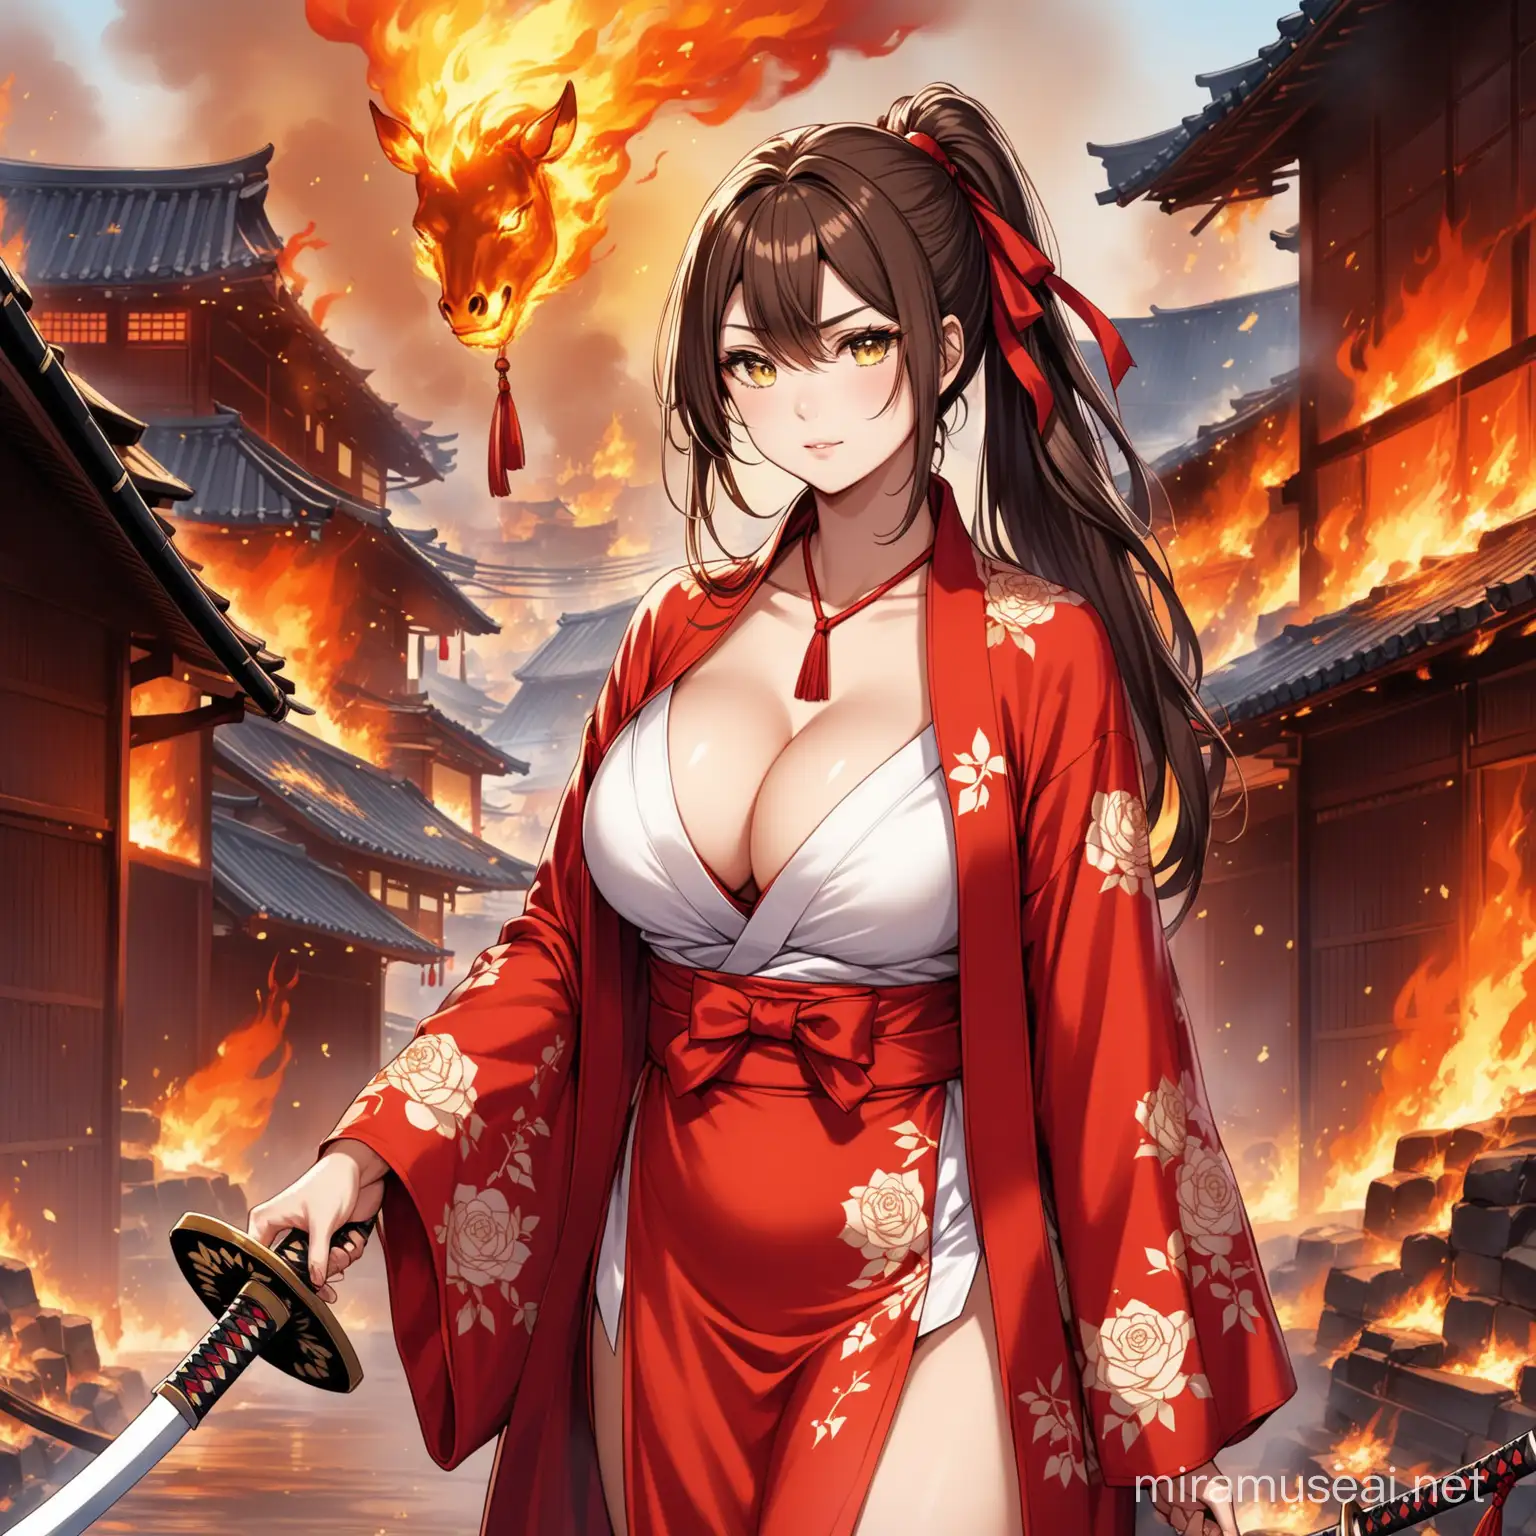 Young Woman in Red Kimono with Glorious Katana Amidst Samurai Town Ruins